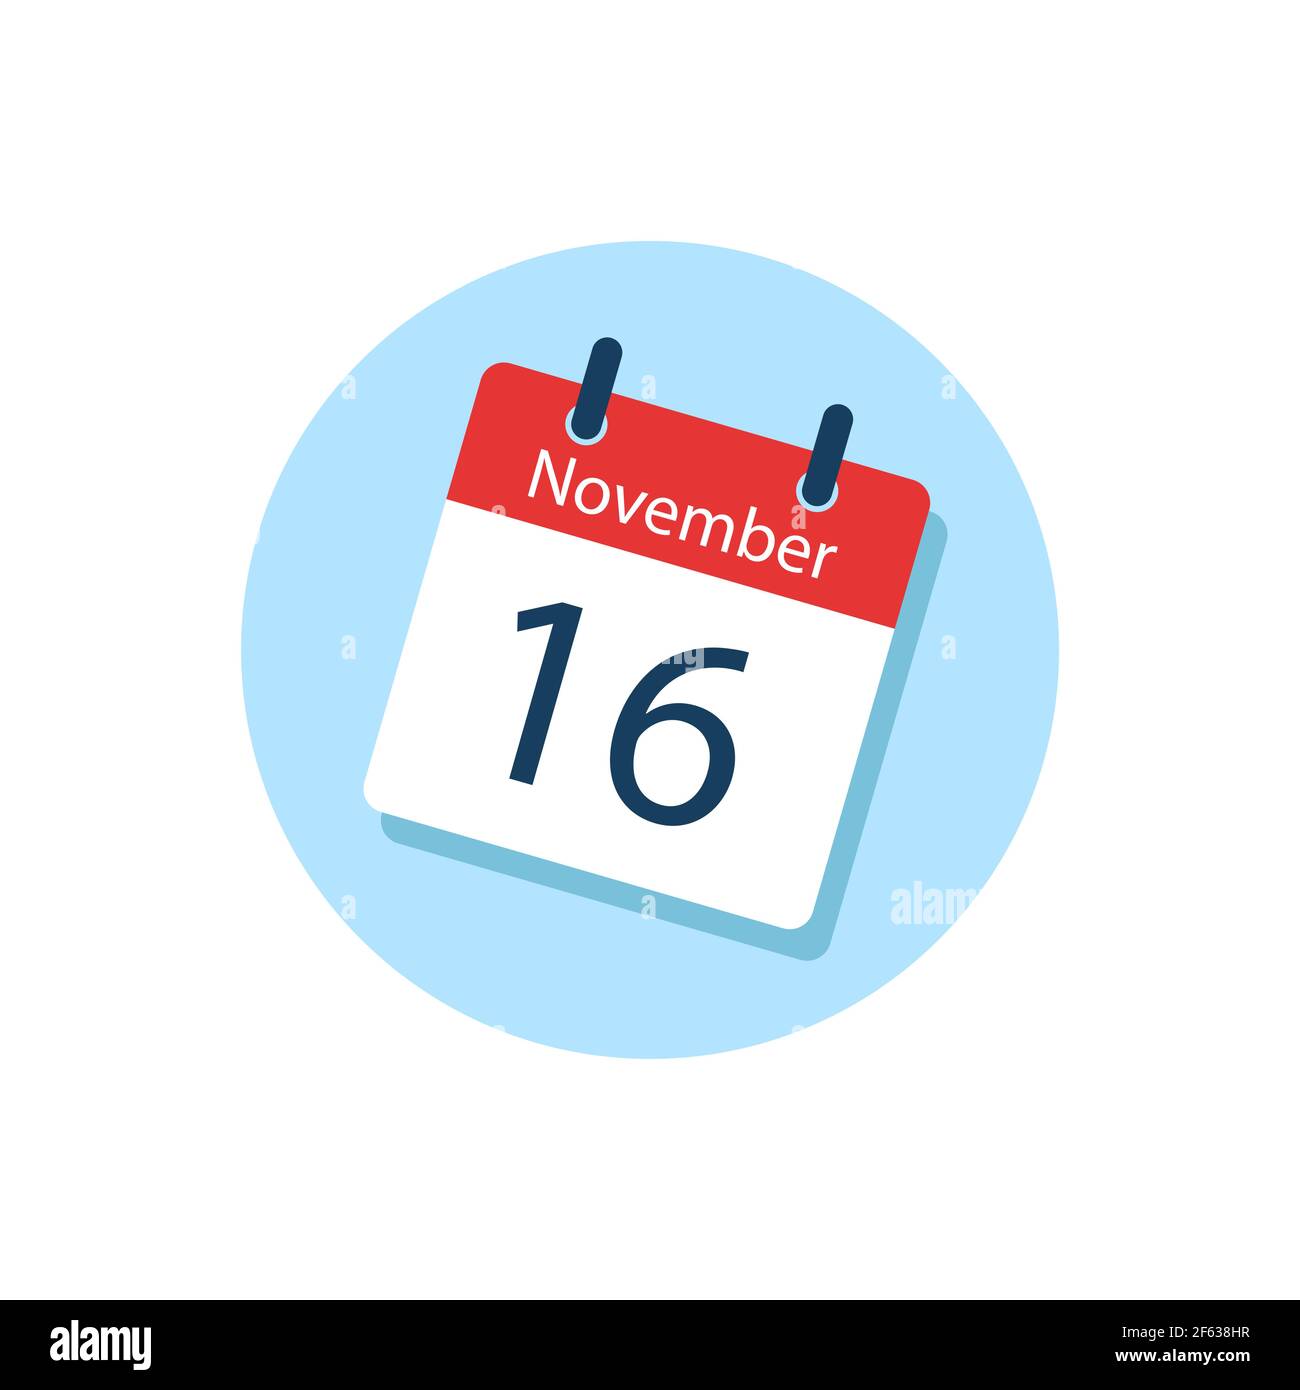 NATIONAL BUTTON DAY - November 16 - National Day Calendar